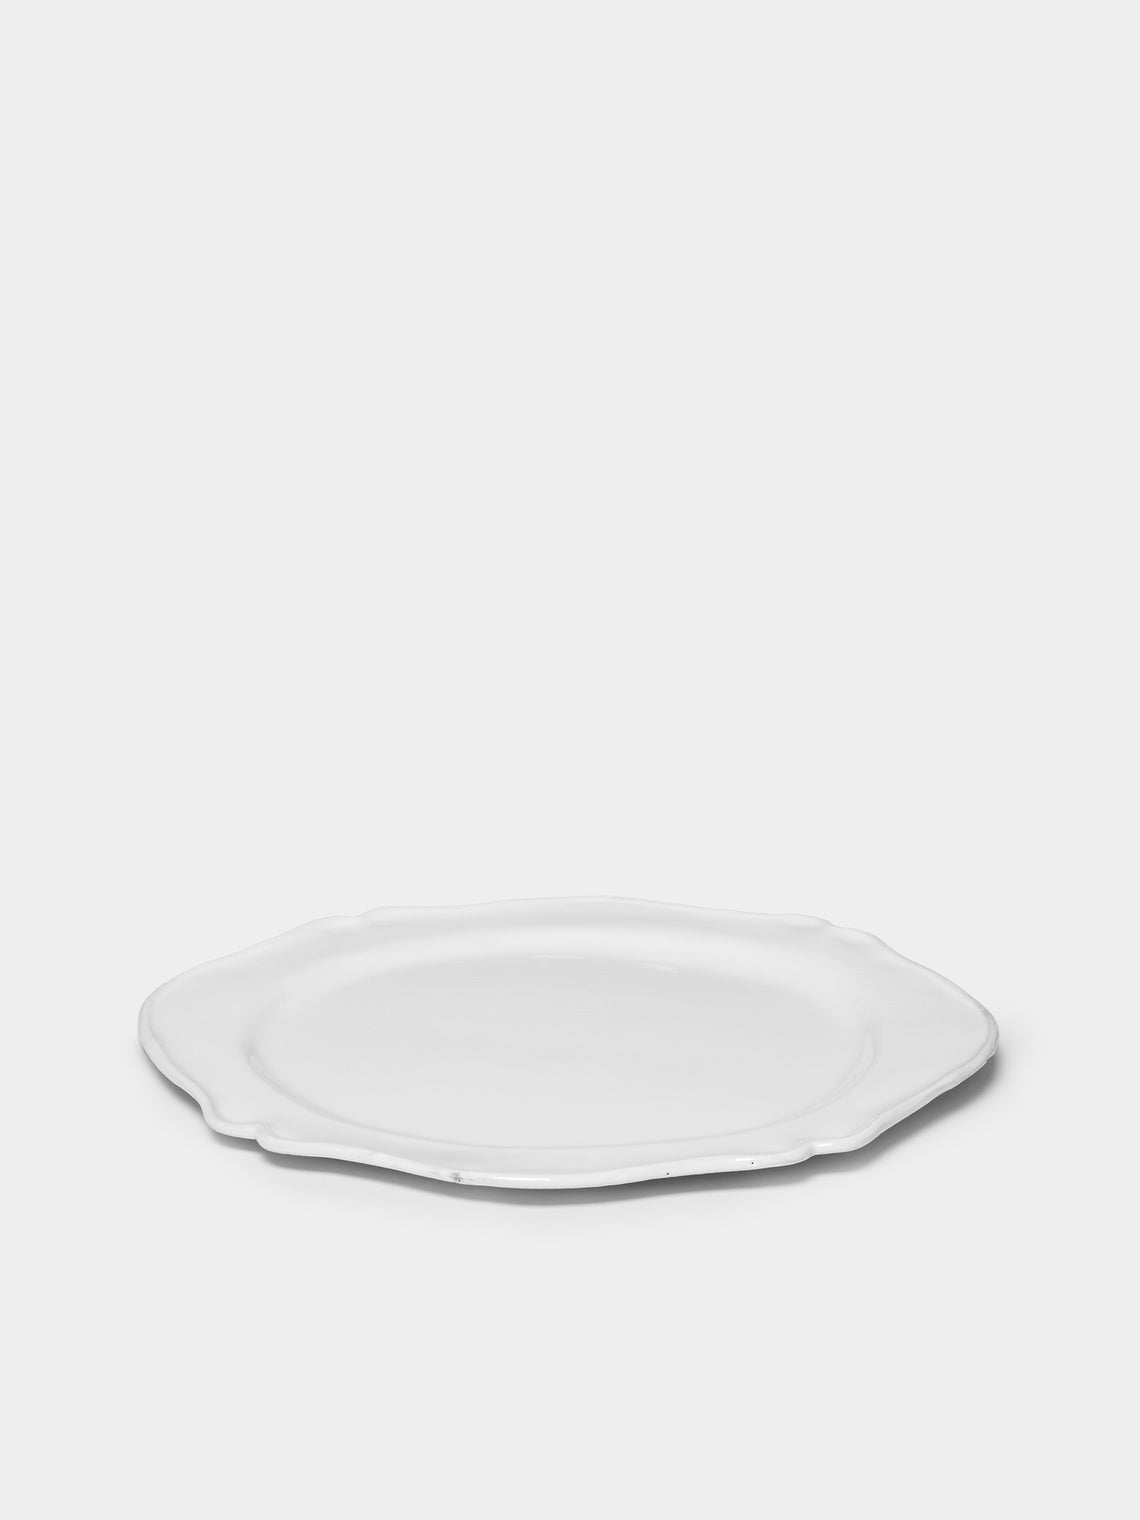 Astier de Villatte - Bac Dinner Plate -  - ABASK